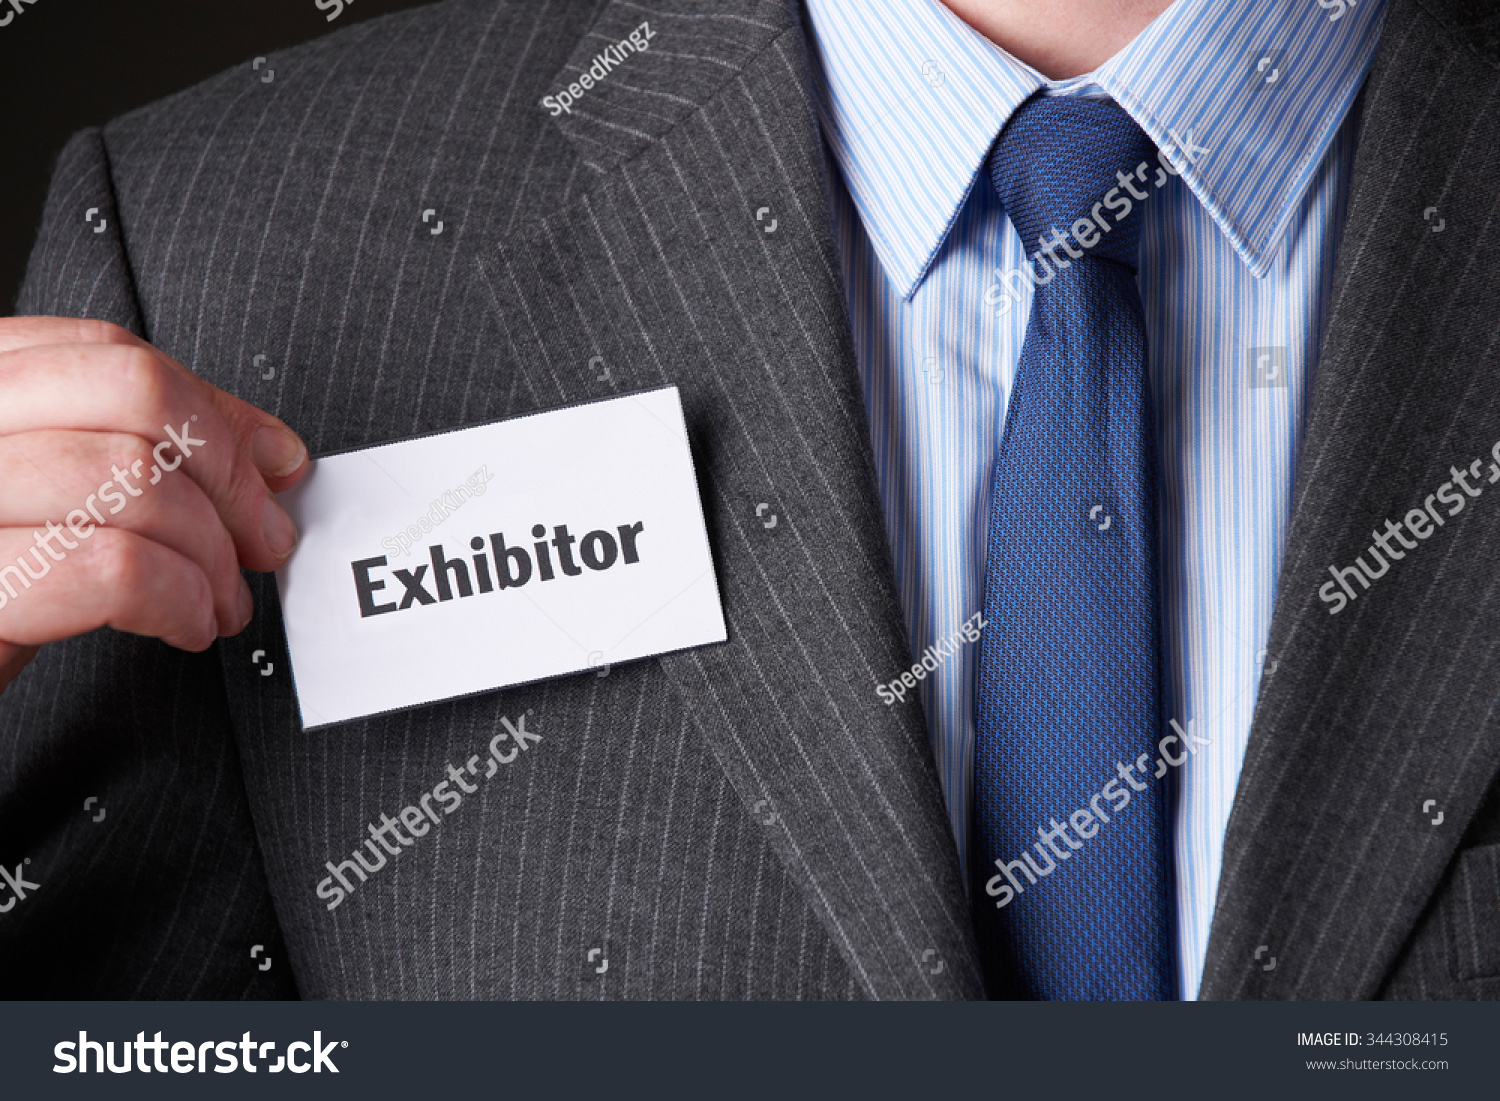 Businessman Attaching Exhibitor Badge To Jacket #344308415